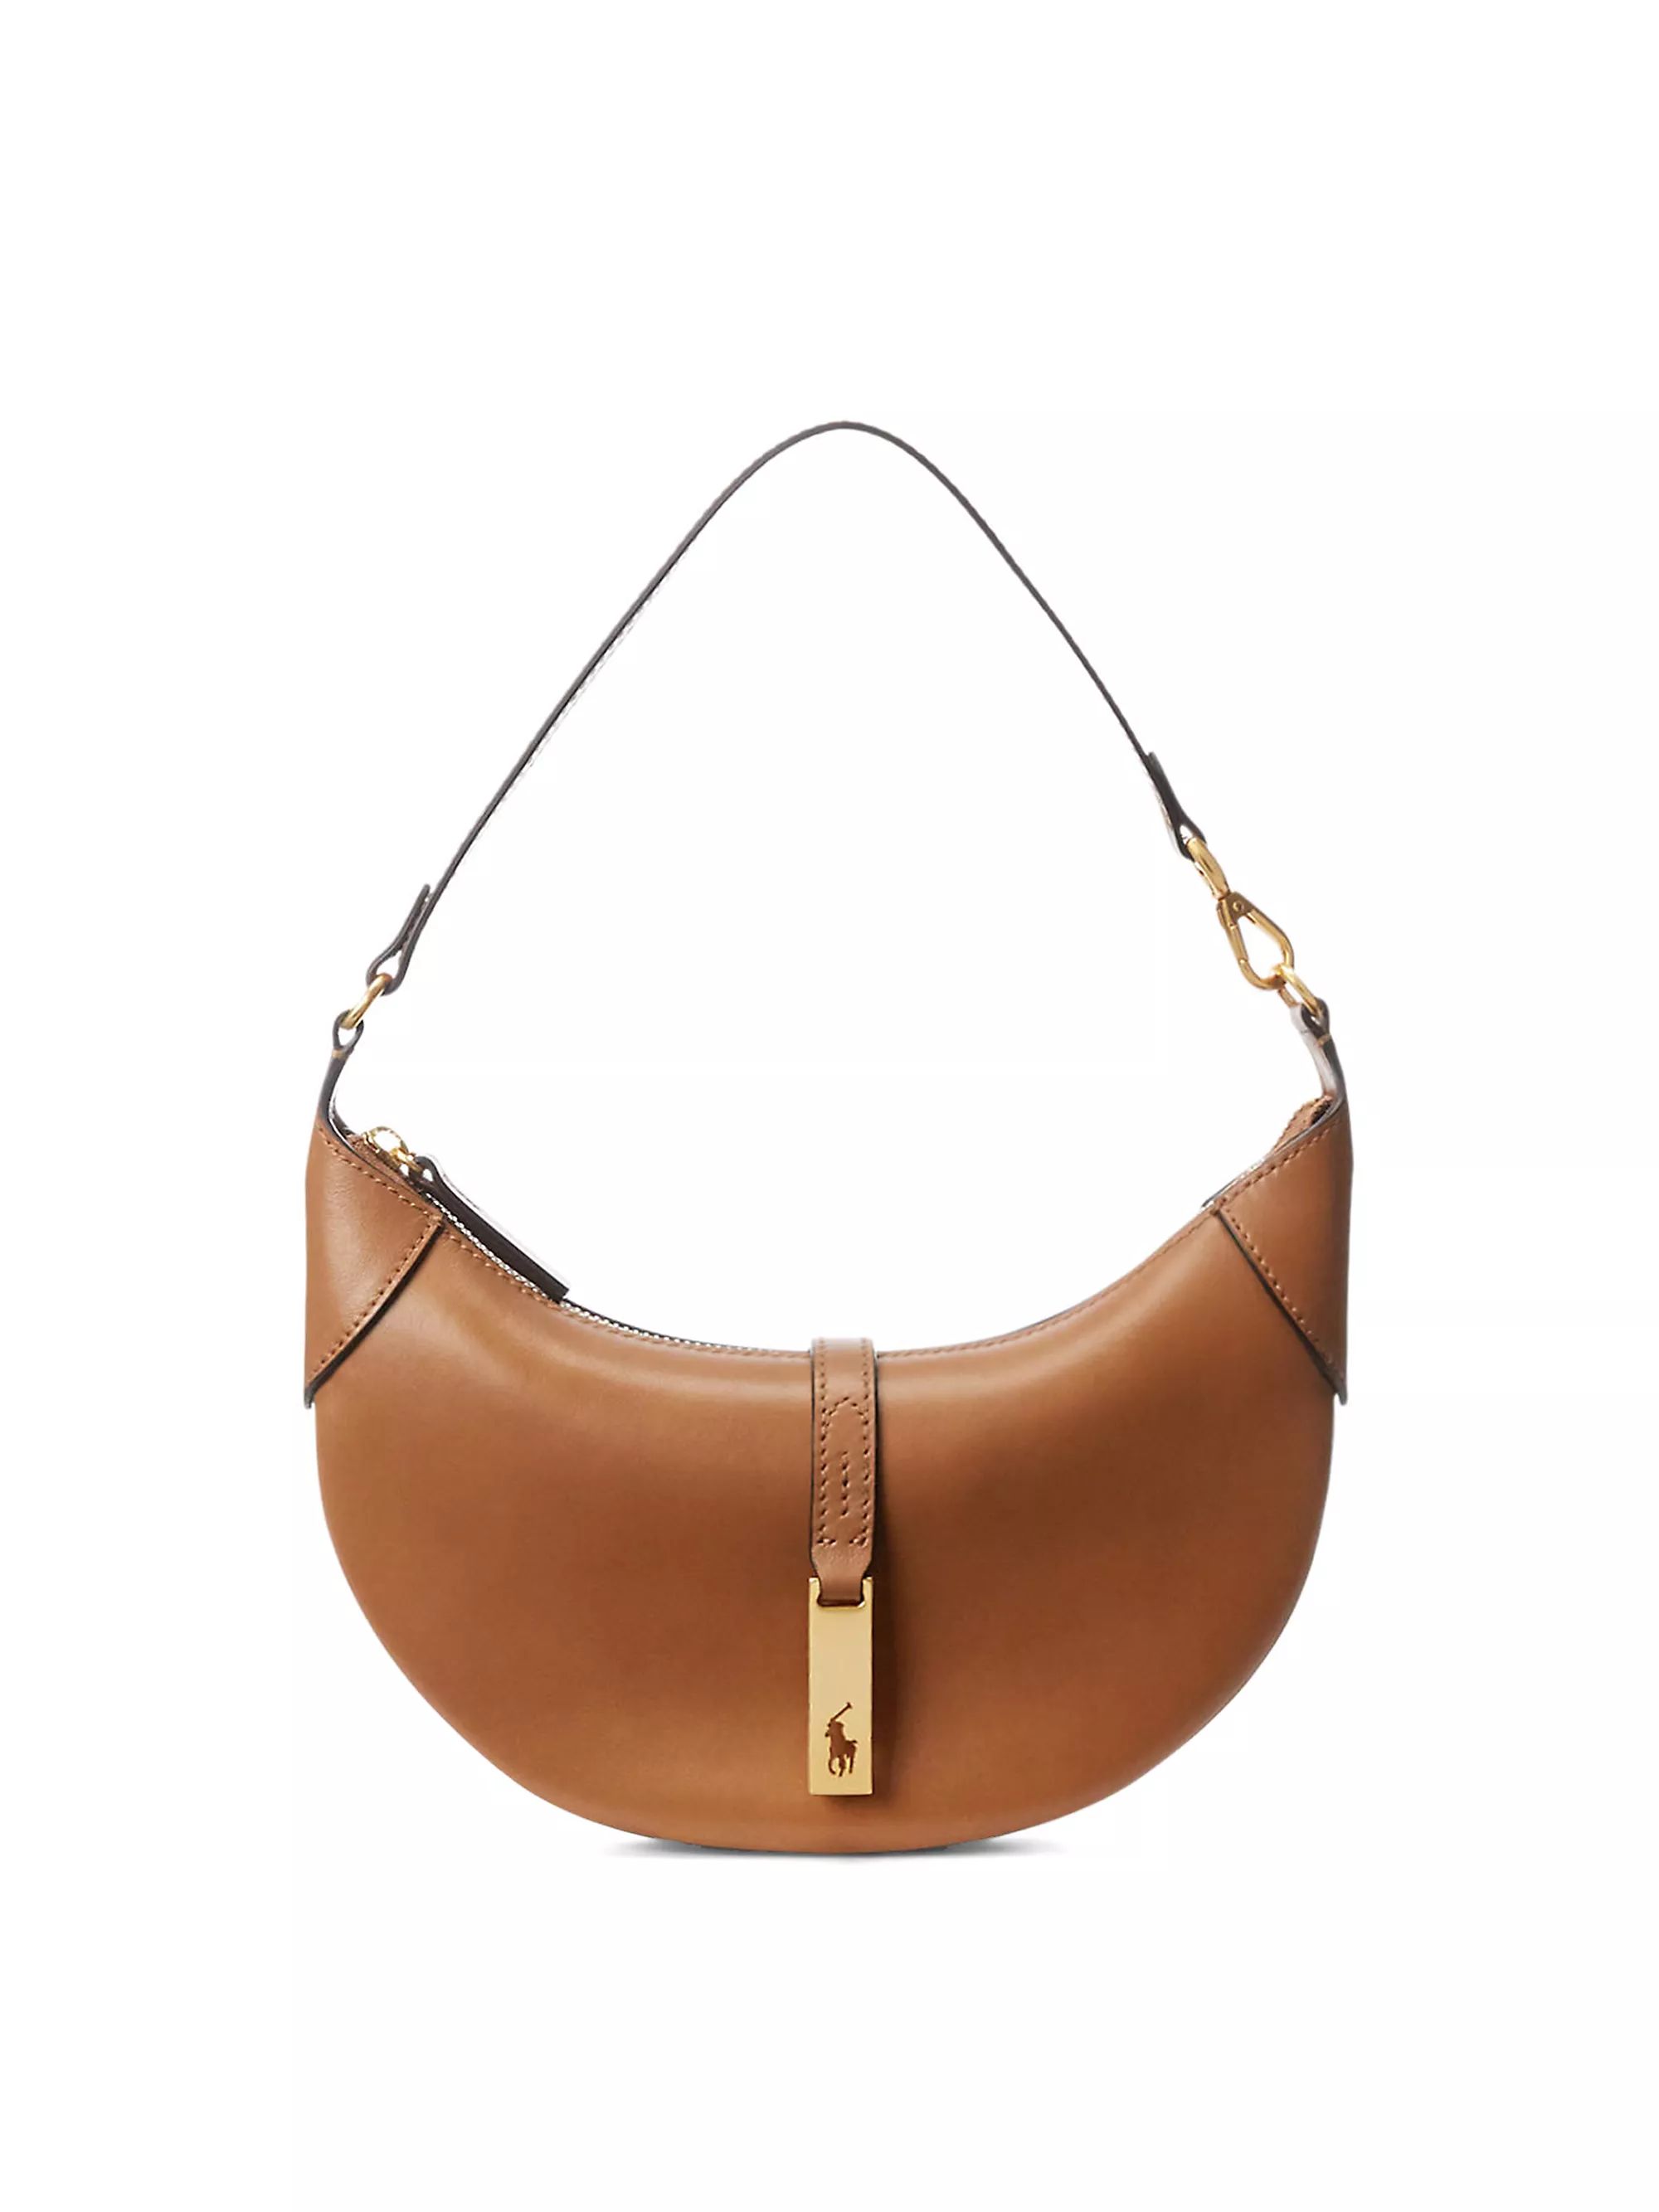 TanStyleBLACKTANAll Shoulder BagsPolo Ralph LaurenMini Polo ID Leather Shoulder Bag$498
         ... | Saks Fifth Avenue